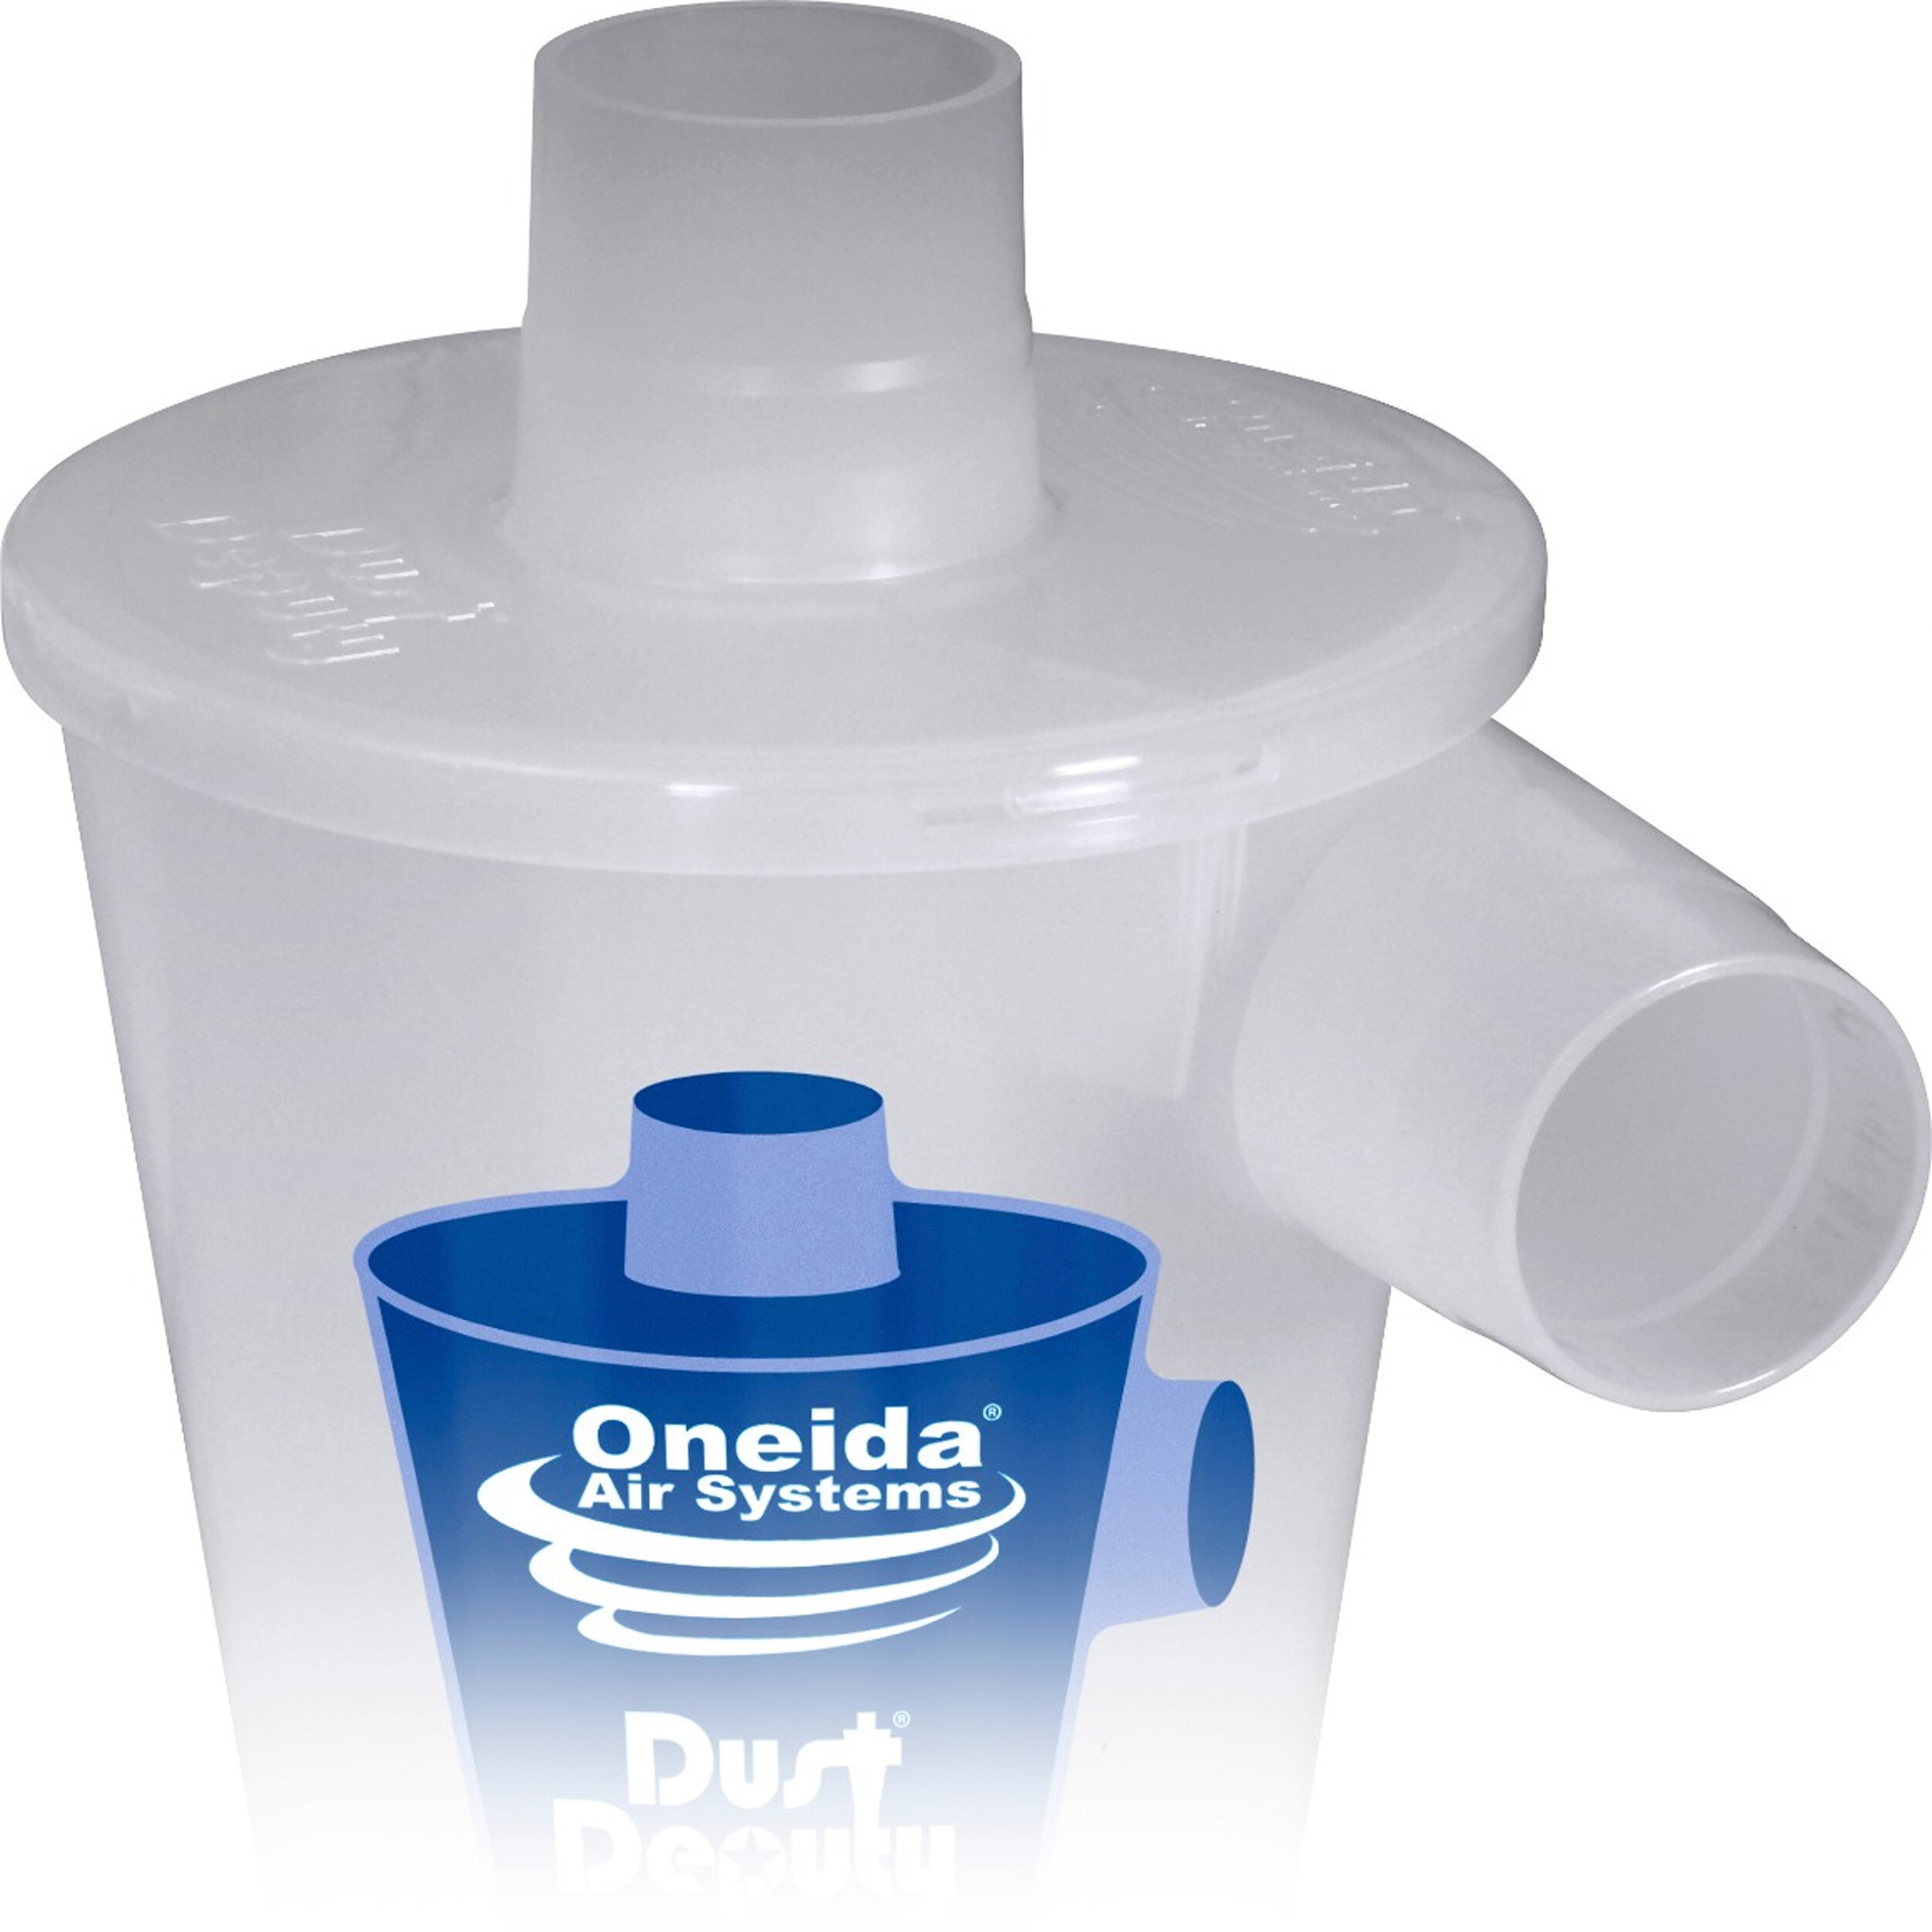 Oneida Air Systems Dust Deputy Plus Dust Separator Kit in the Shop